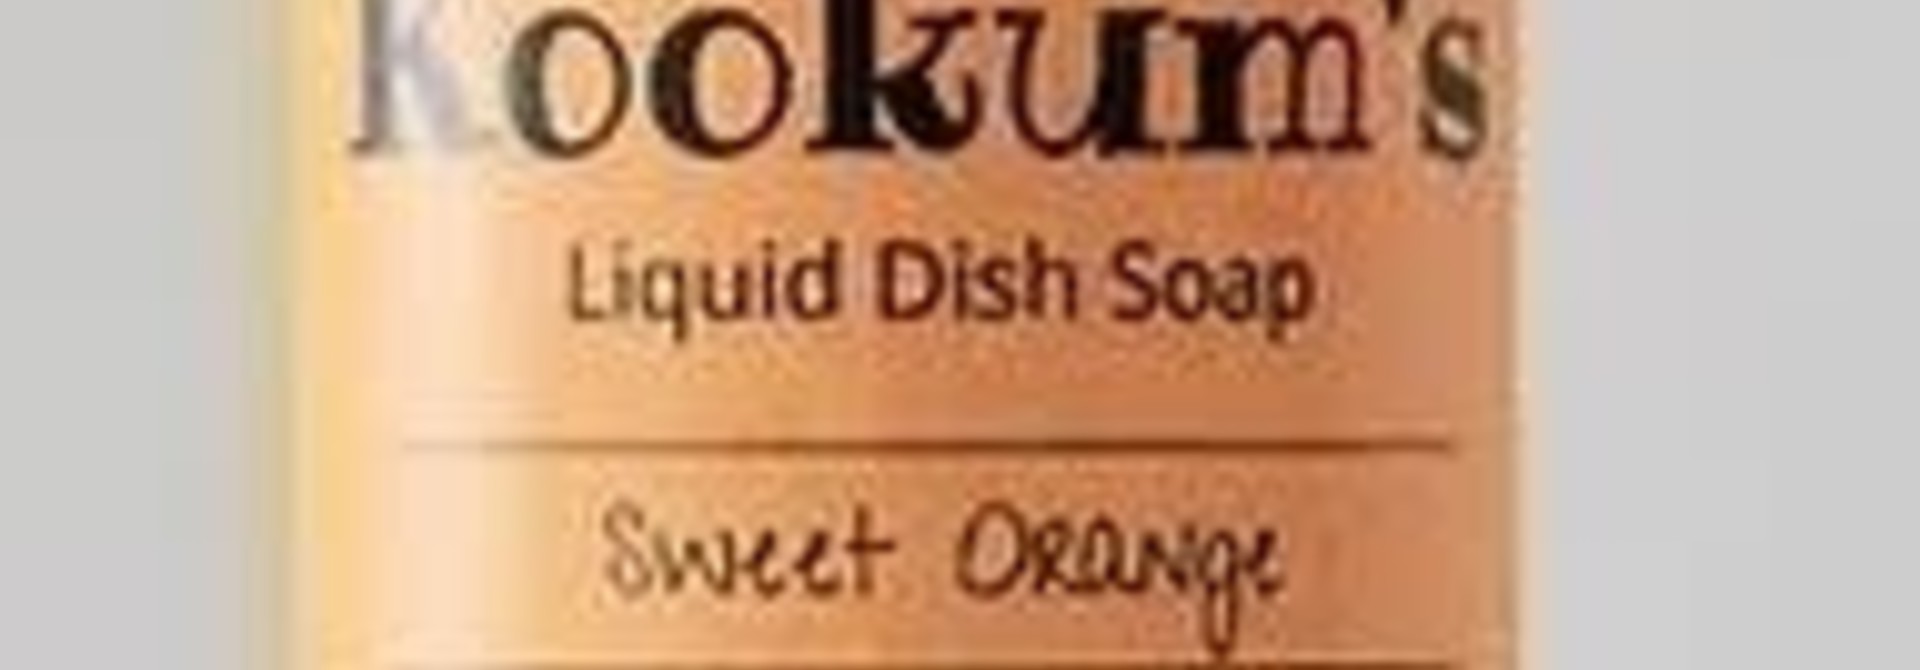 Kookum's Sweet Orange Liquid Dish Soap 6oz- by Sweetgrass Soap